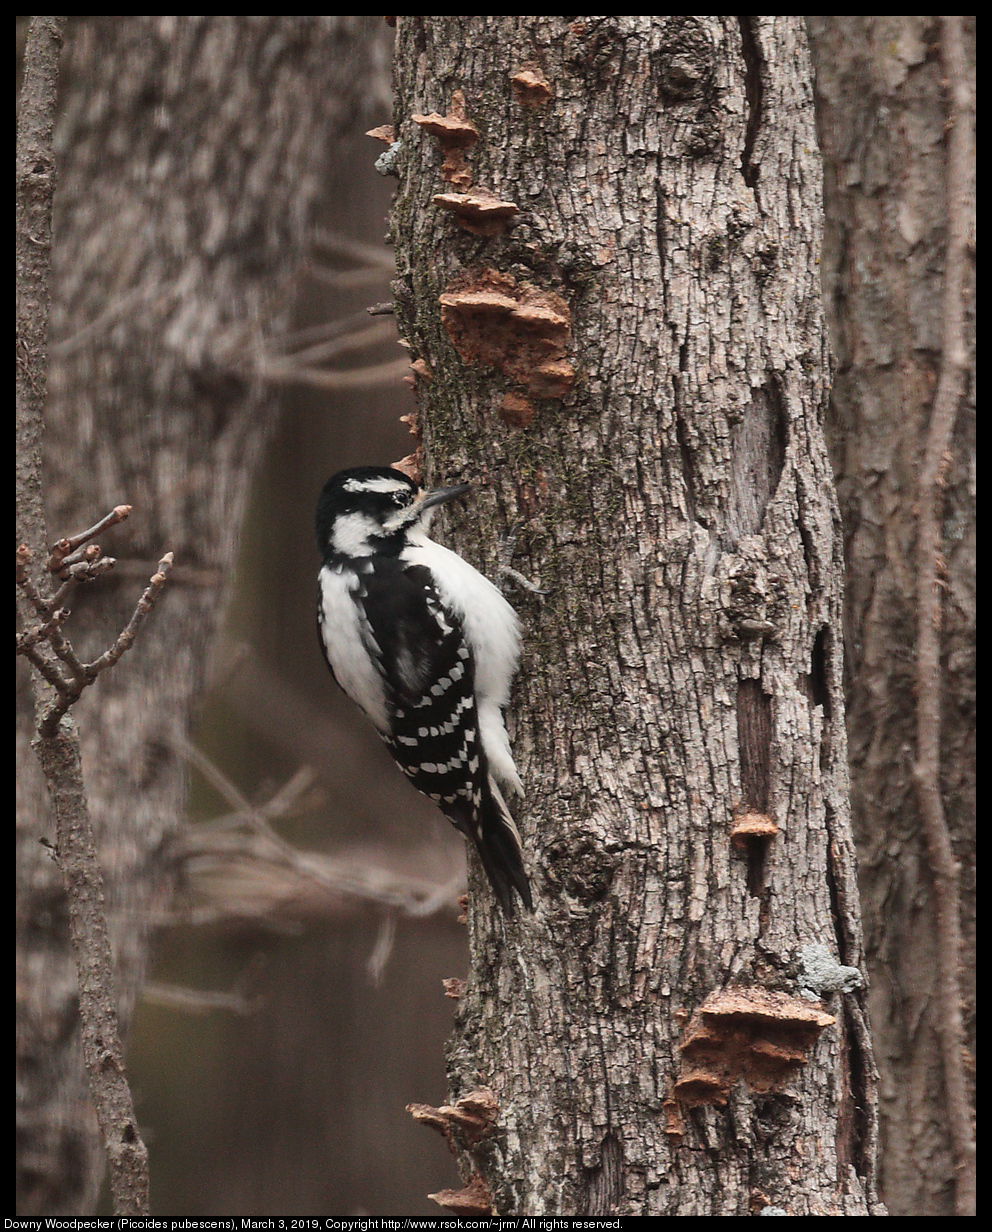 Downy Woodpecker (Picoides pubescens), March 3, 2019